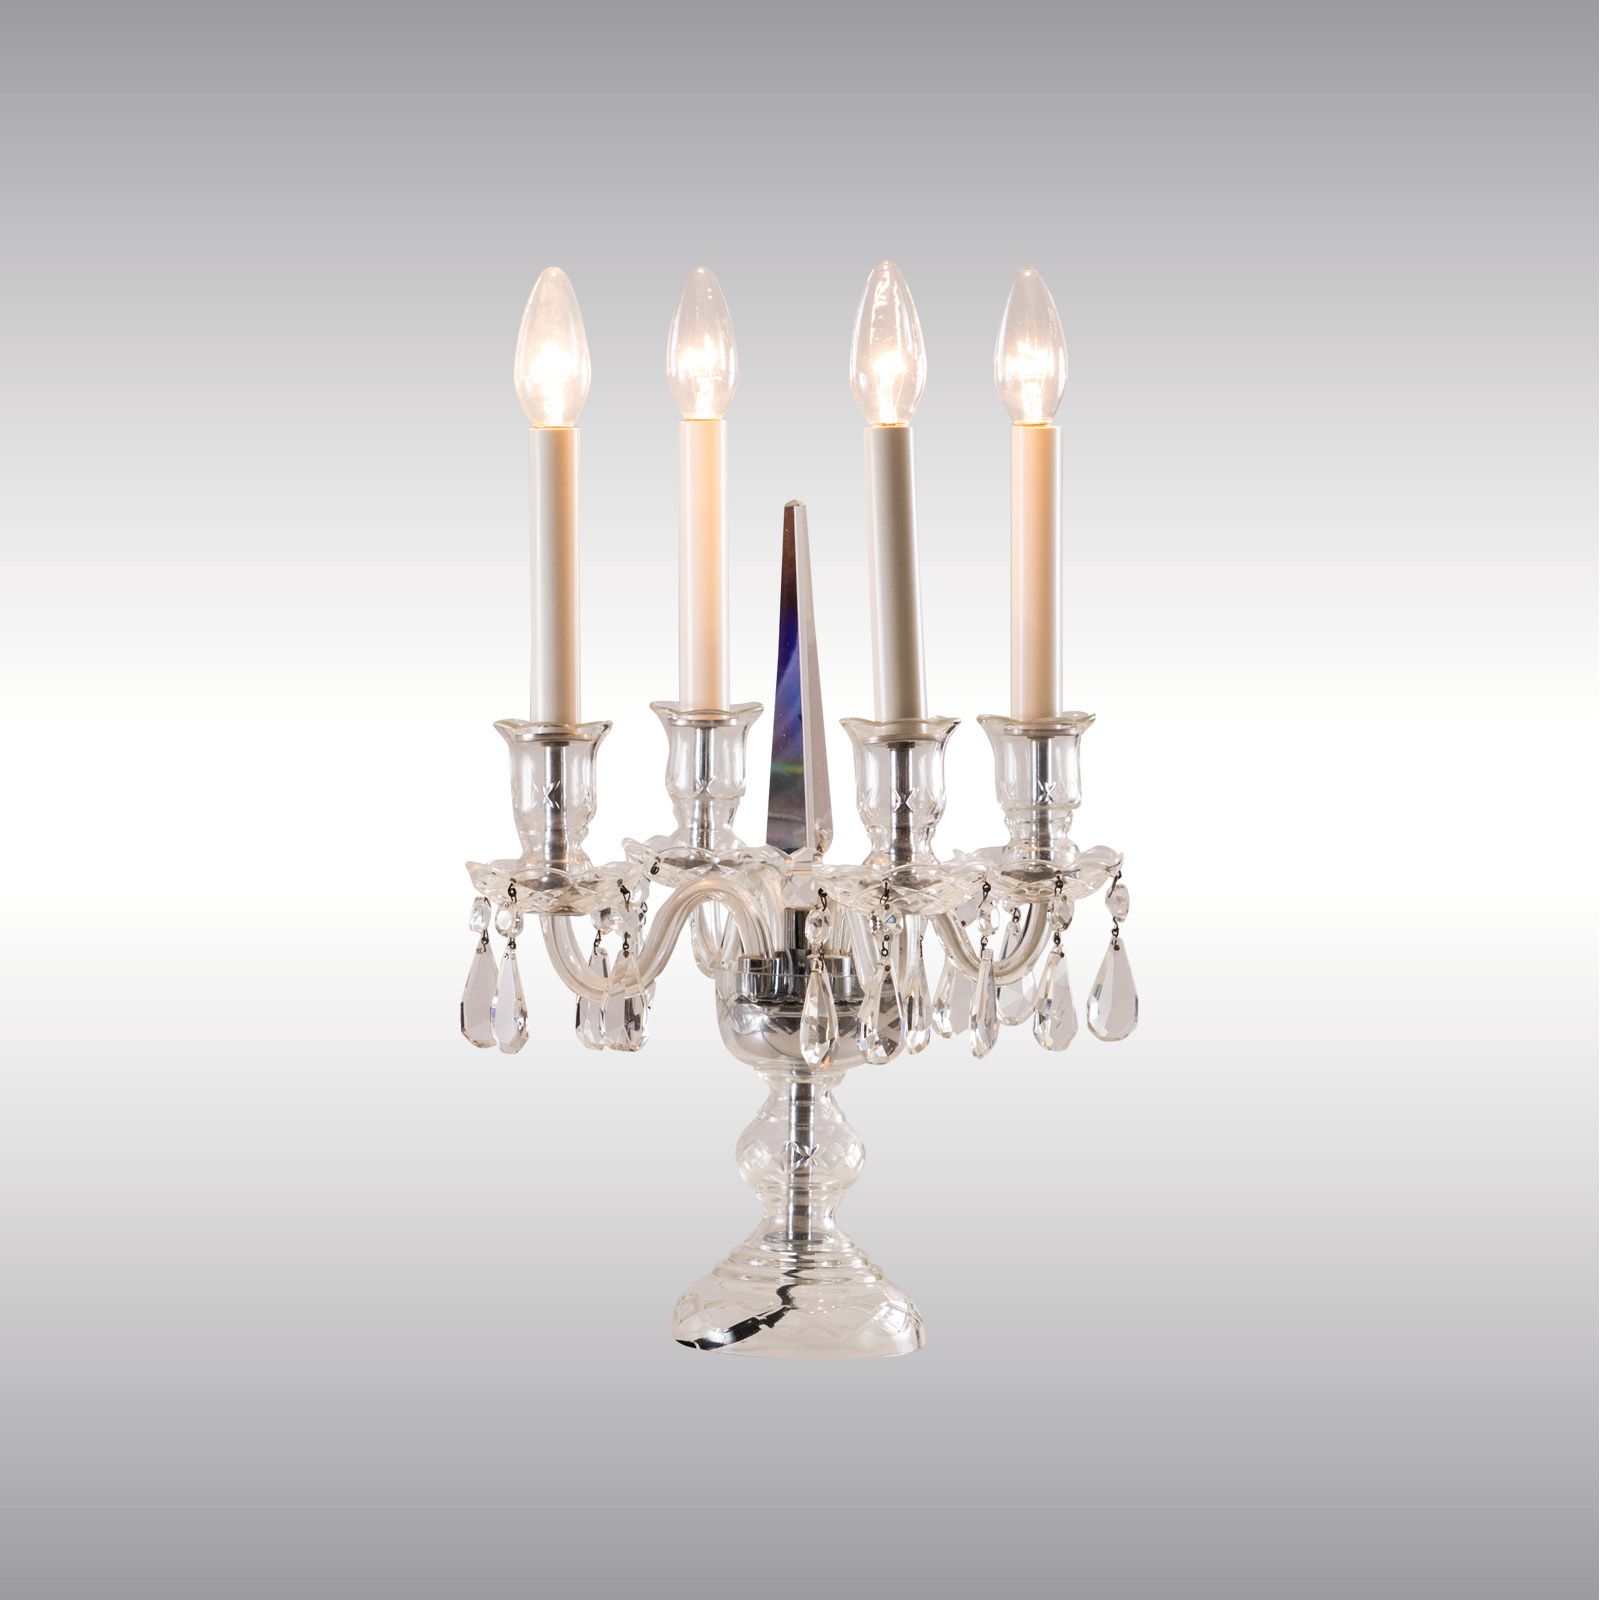 WOKA LAMPS VIENNA - OrderNr.: 80024|Crystal-Table-Lamp - Design: WOKA